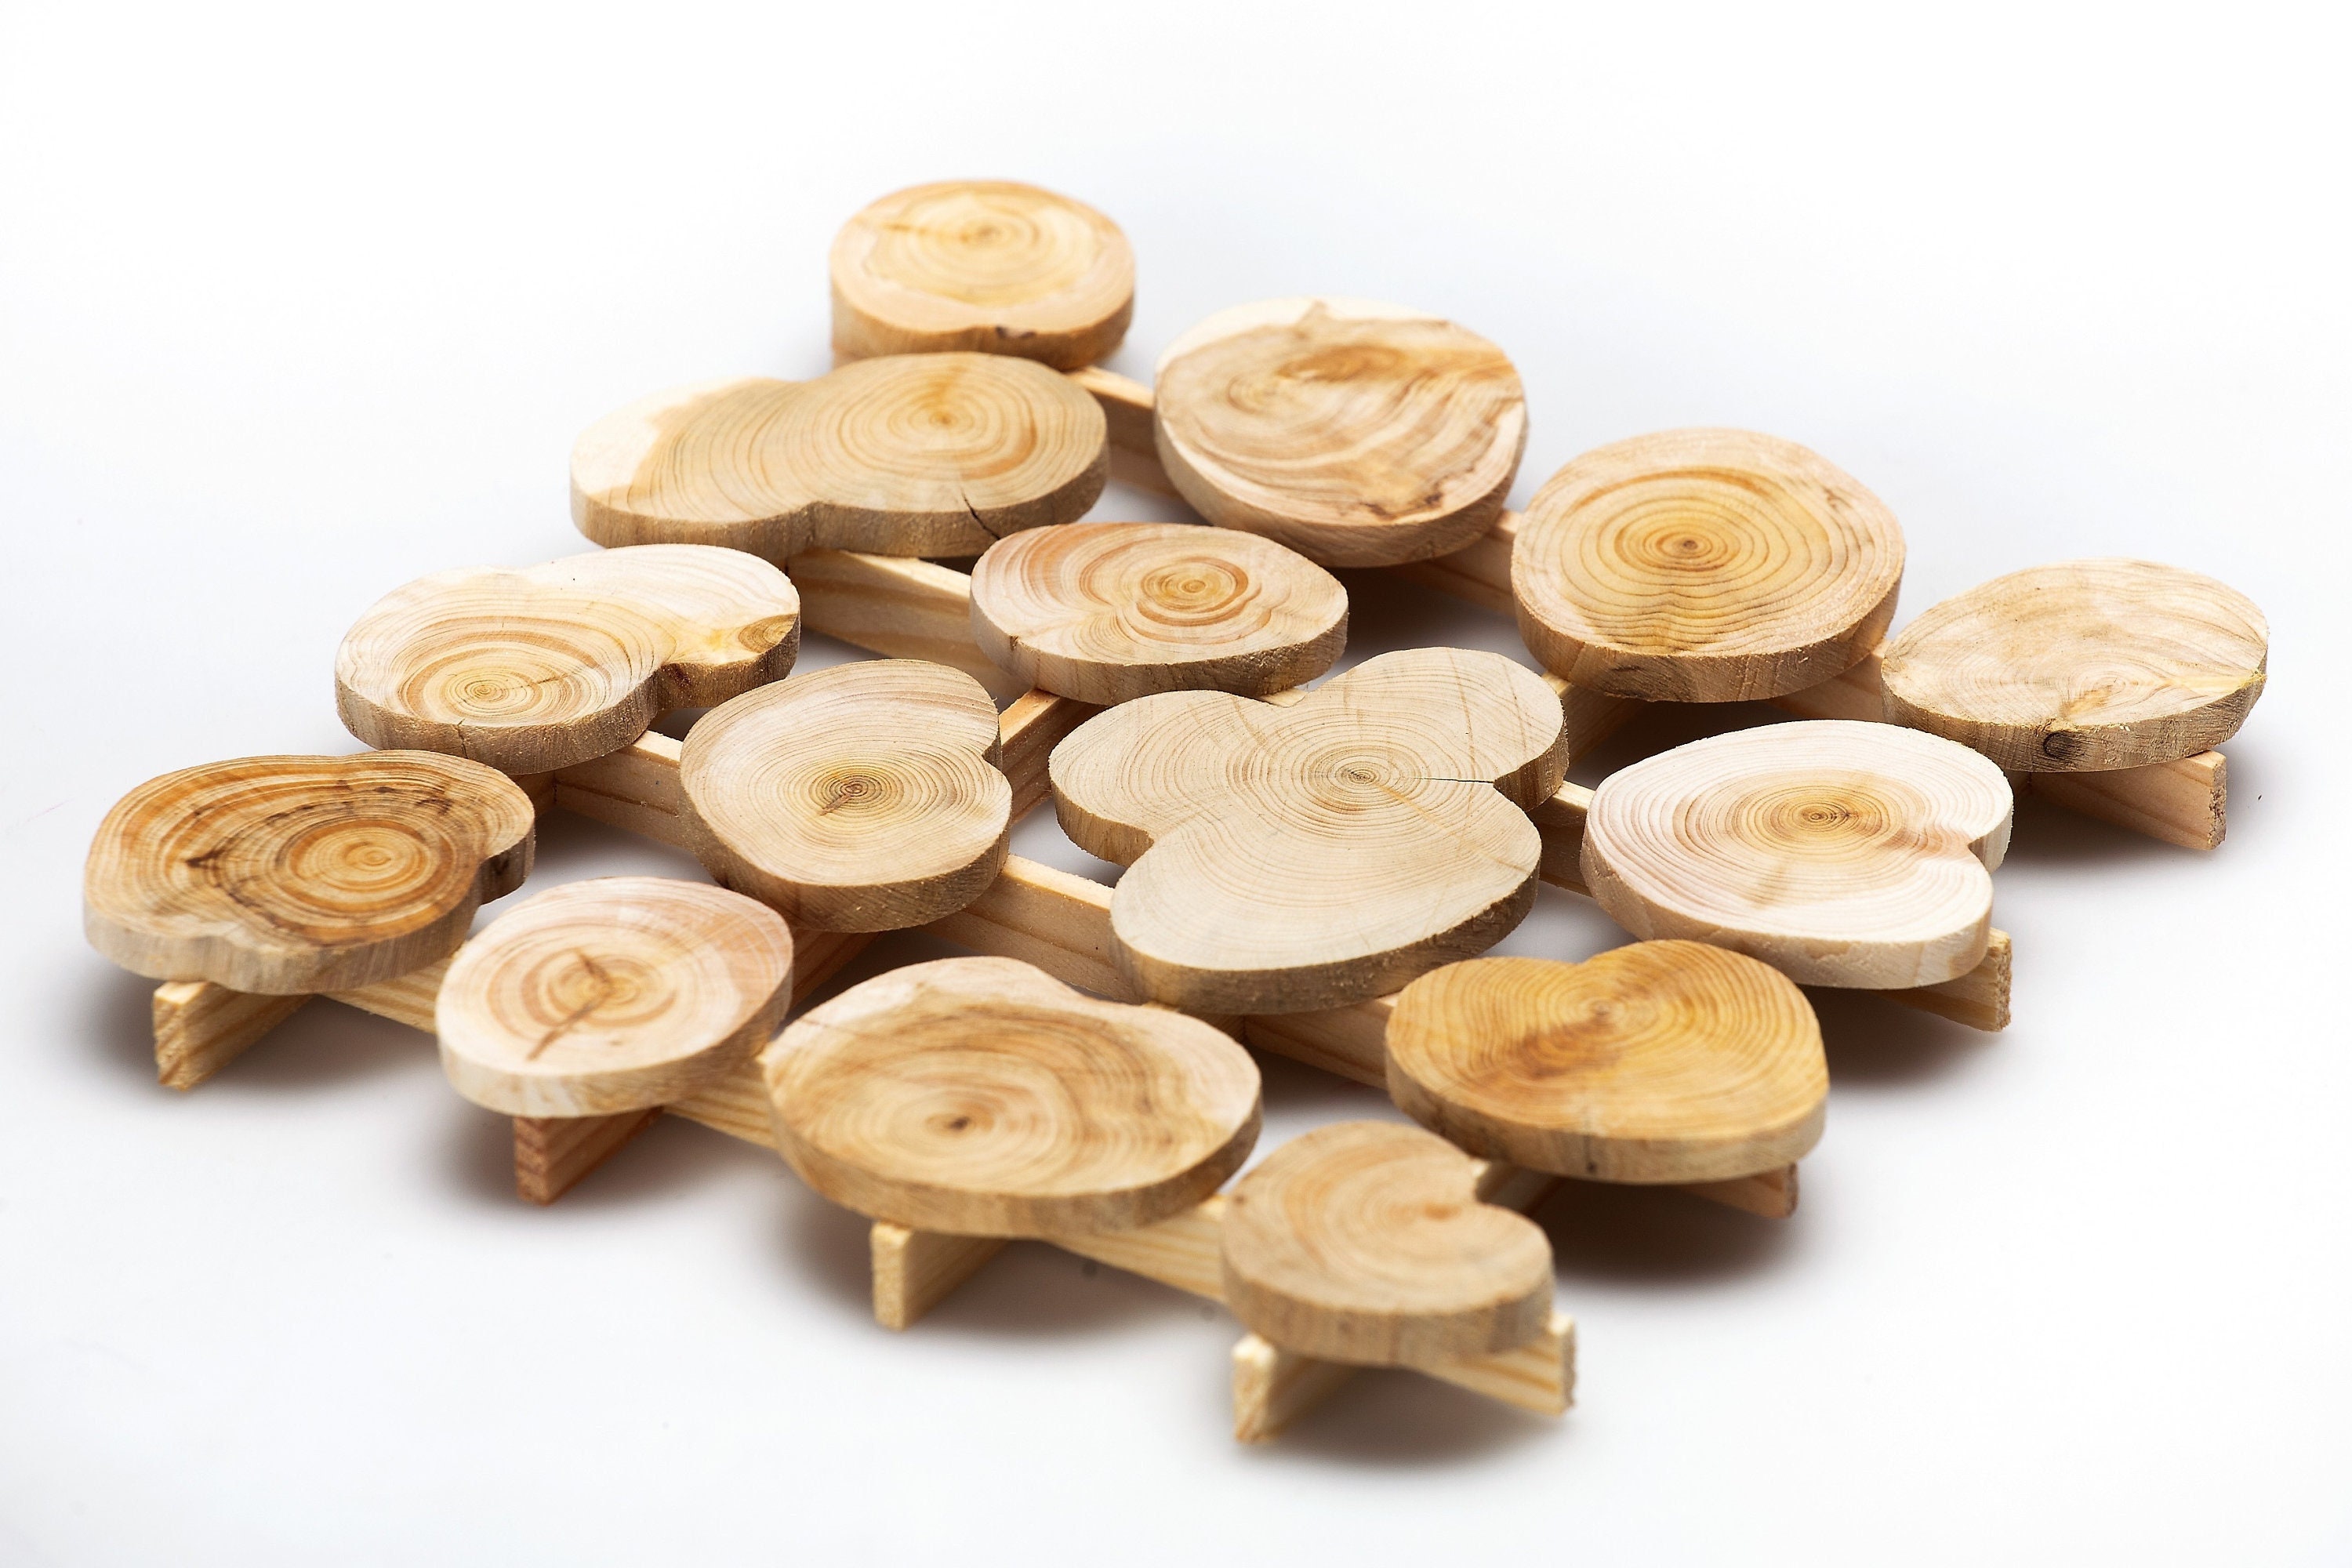 Untreated Wood Tray-unfinished Wood Tray-decoupage Wood Tray-pine